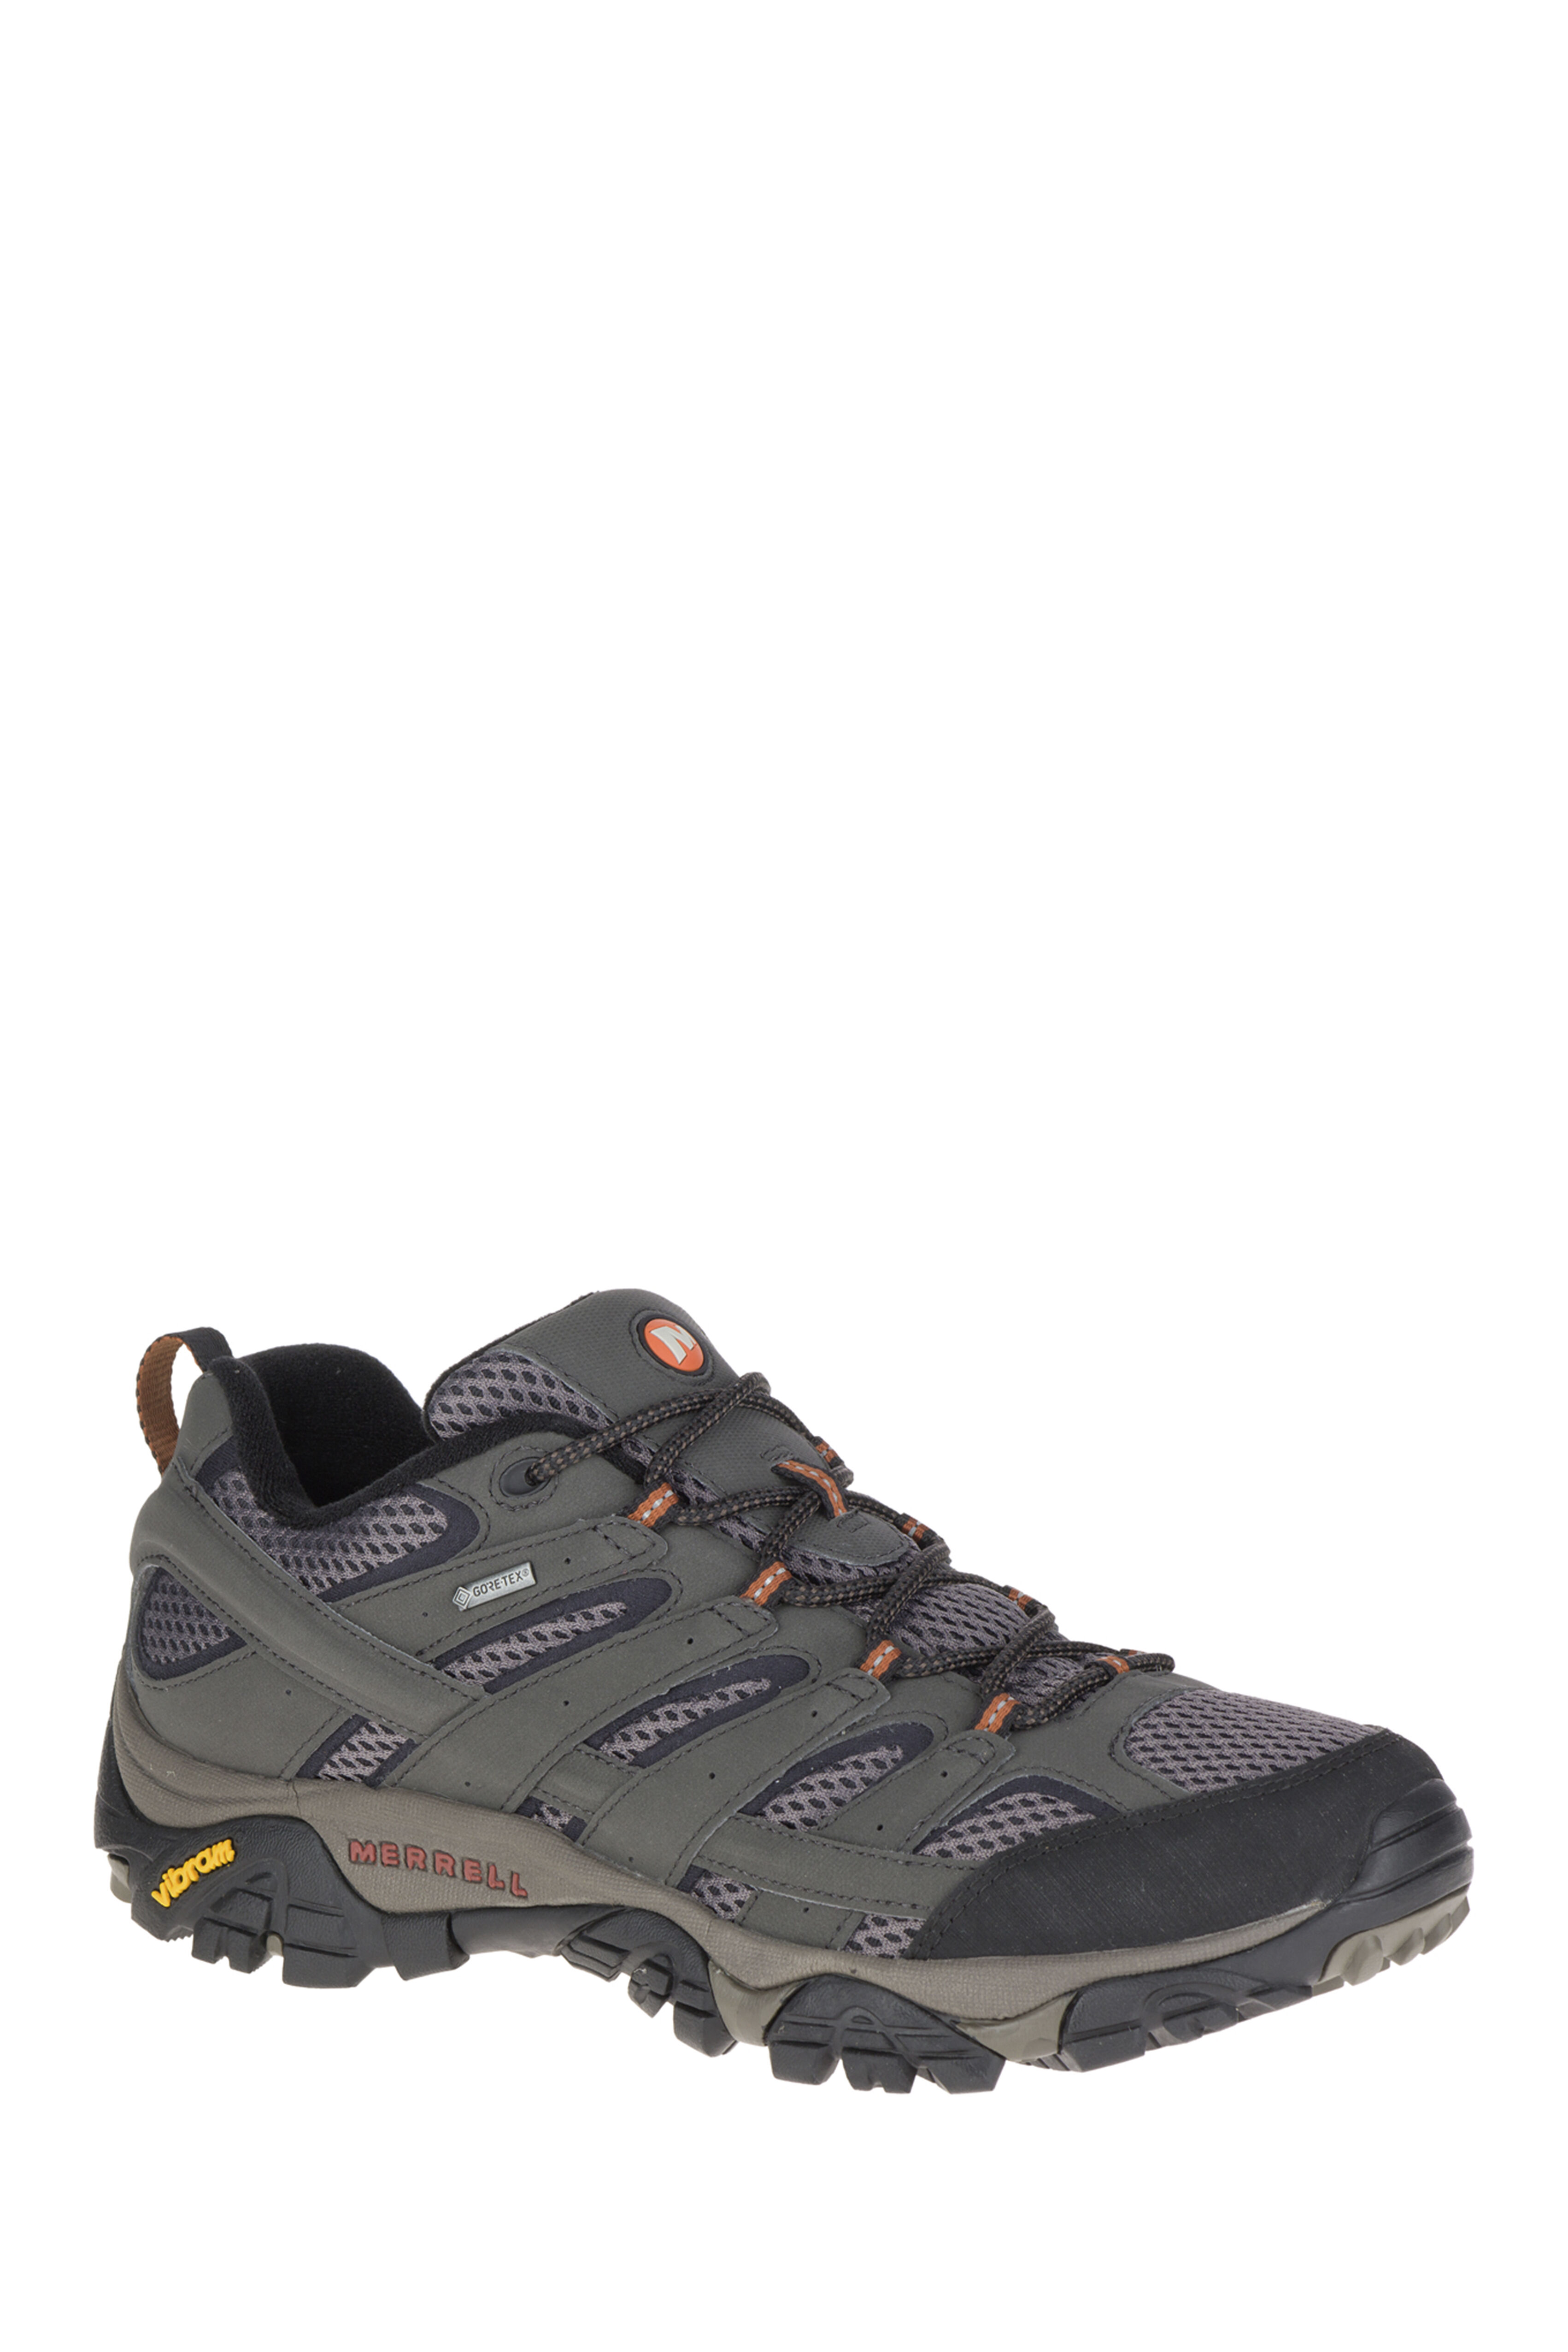 Merrell Moab 2 GTX Hiking Shoes — Men 